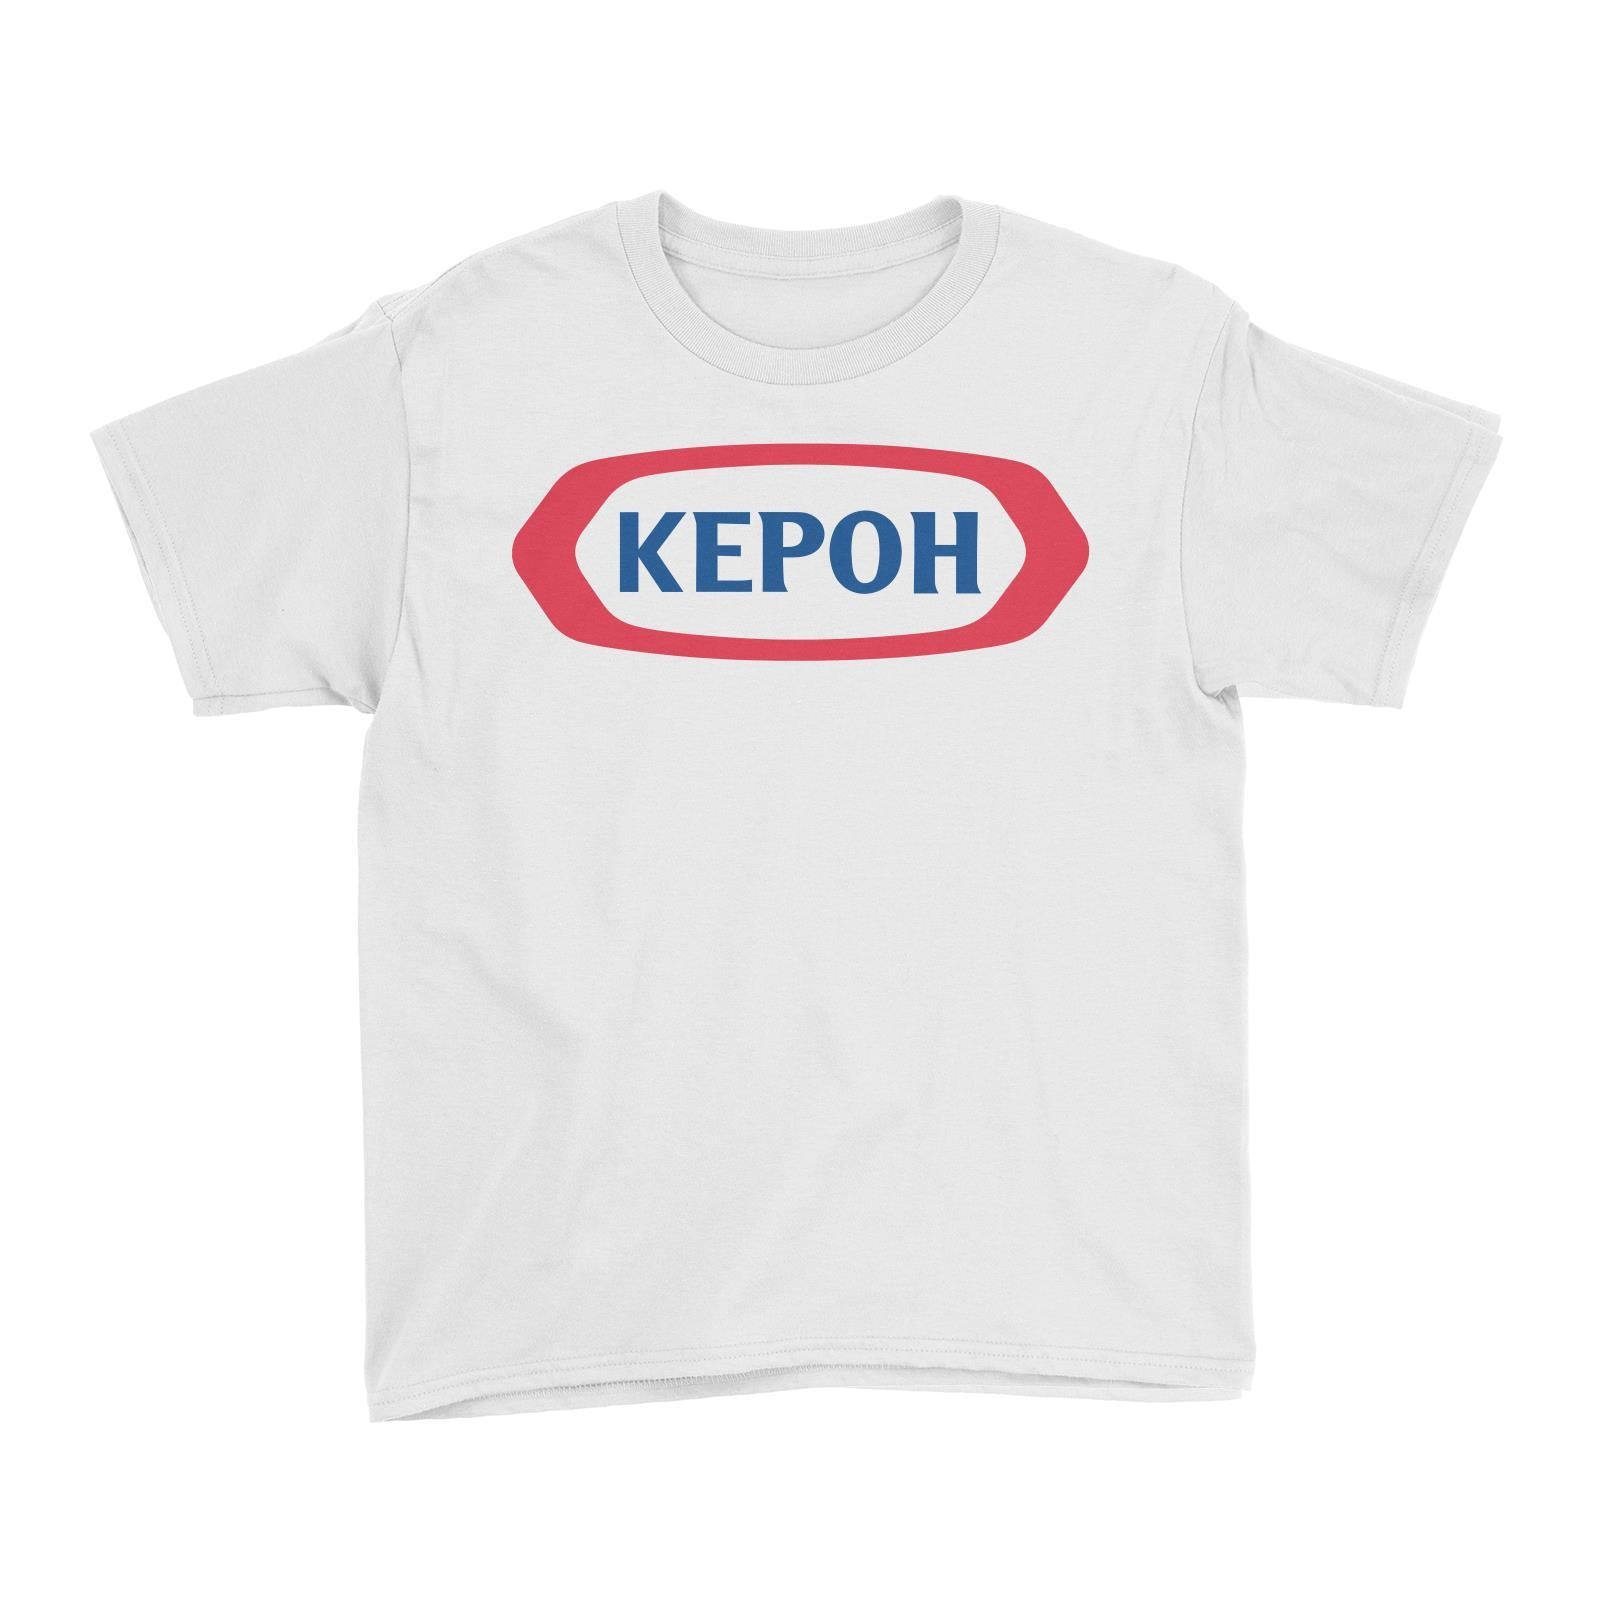 Slang Statement Kepoh Kid's T-Shirt